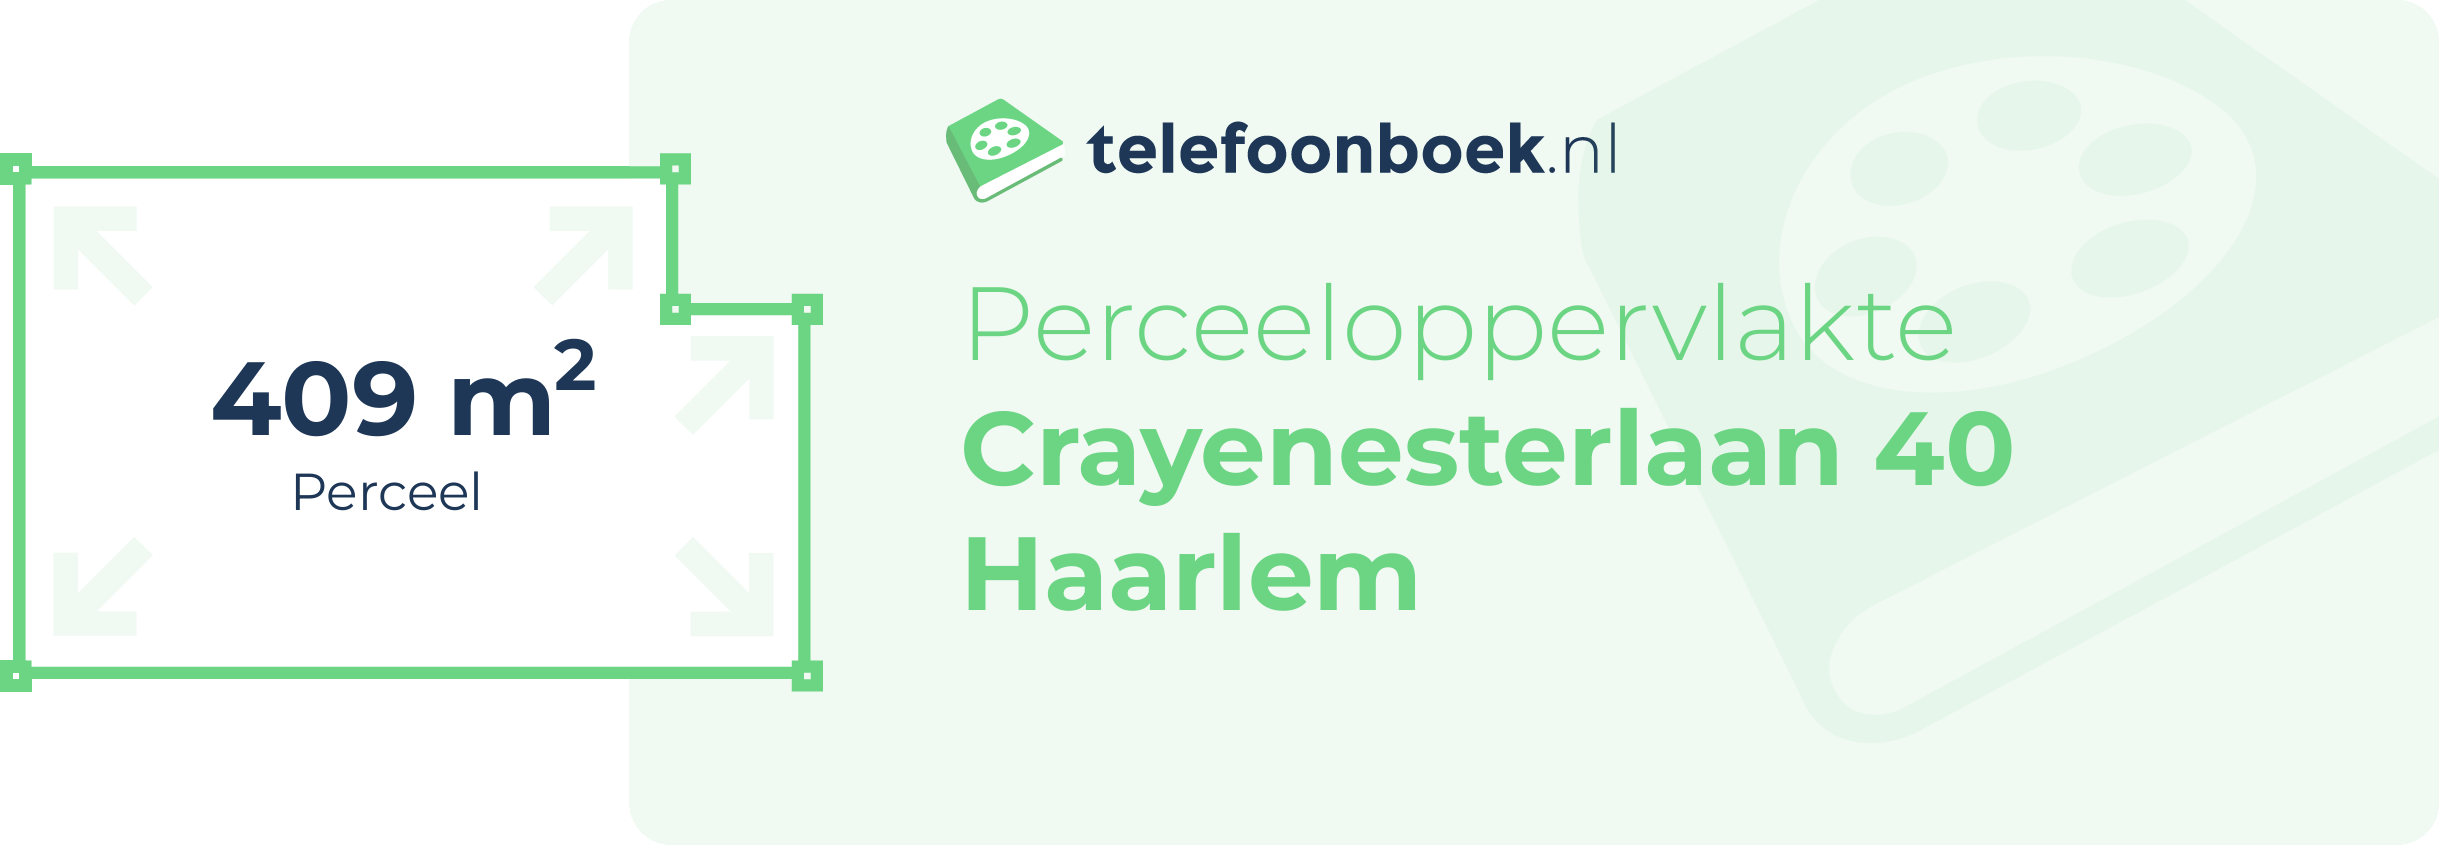 Perceeloppervlakte Crayenesterlaan 40 Haarlem